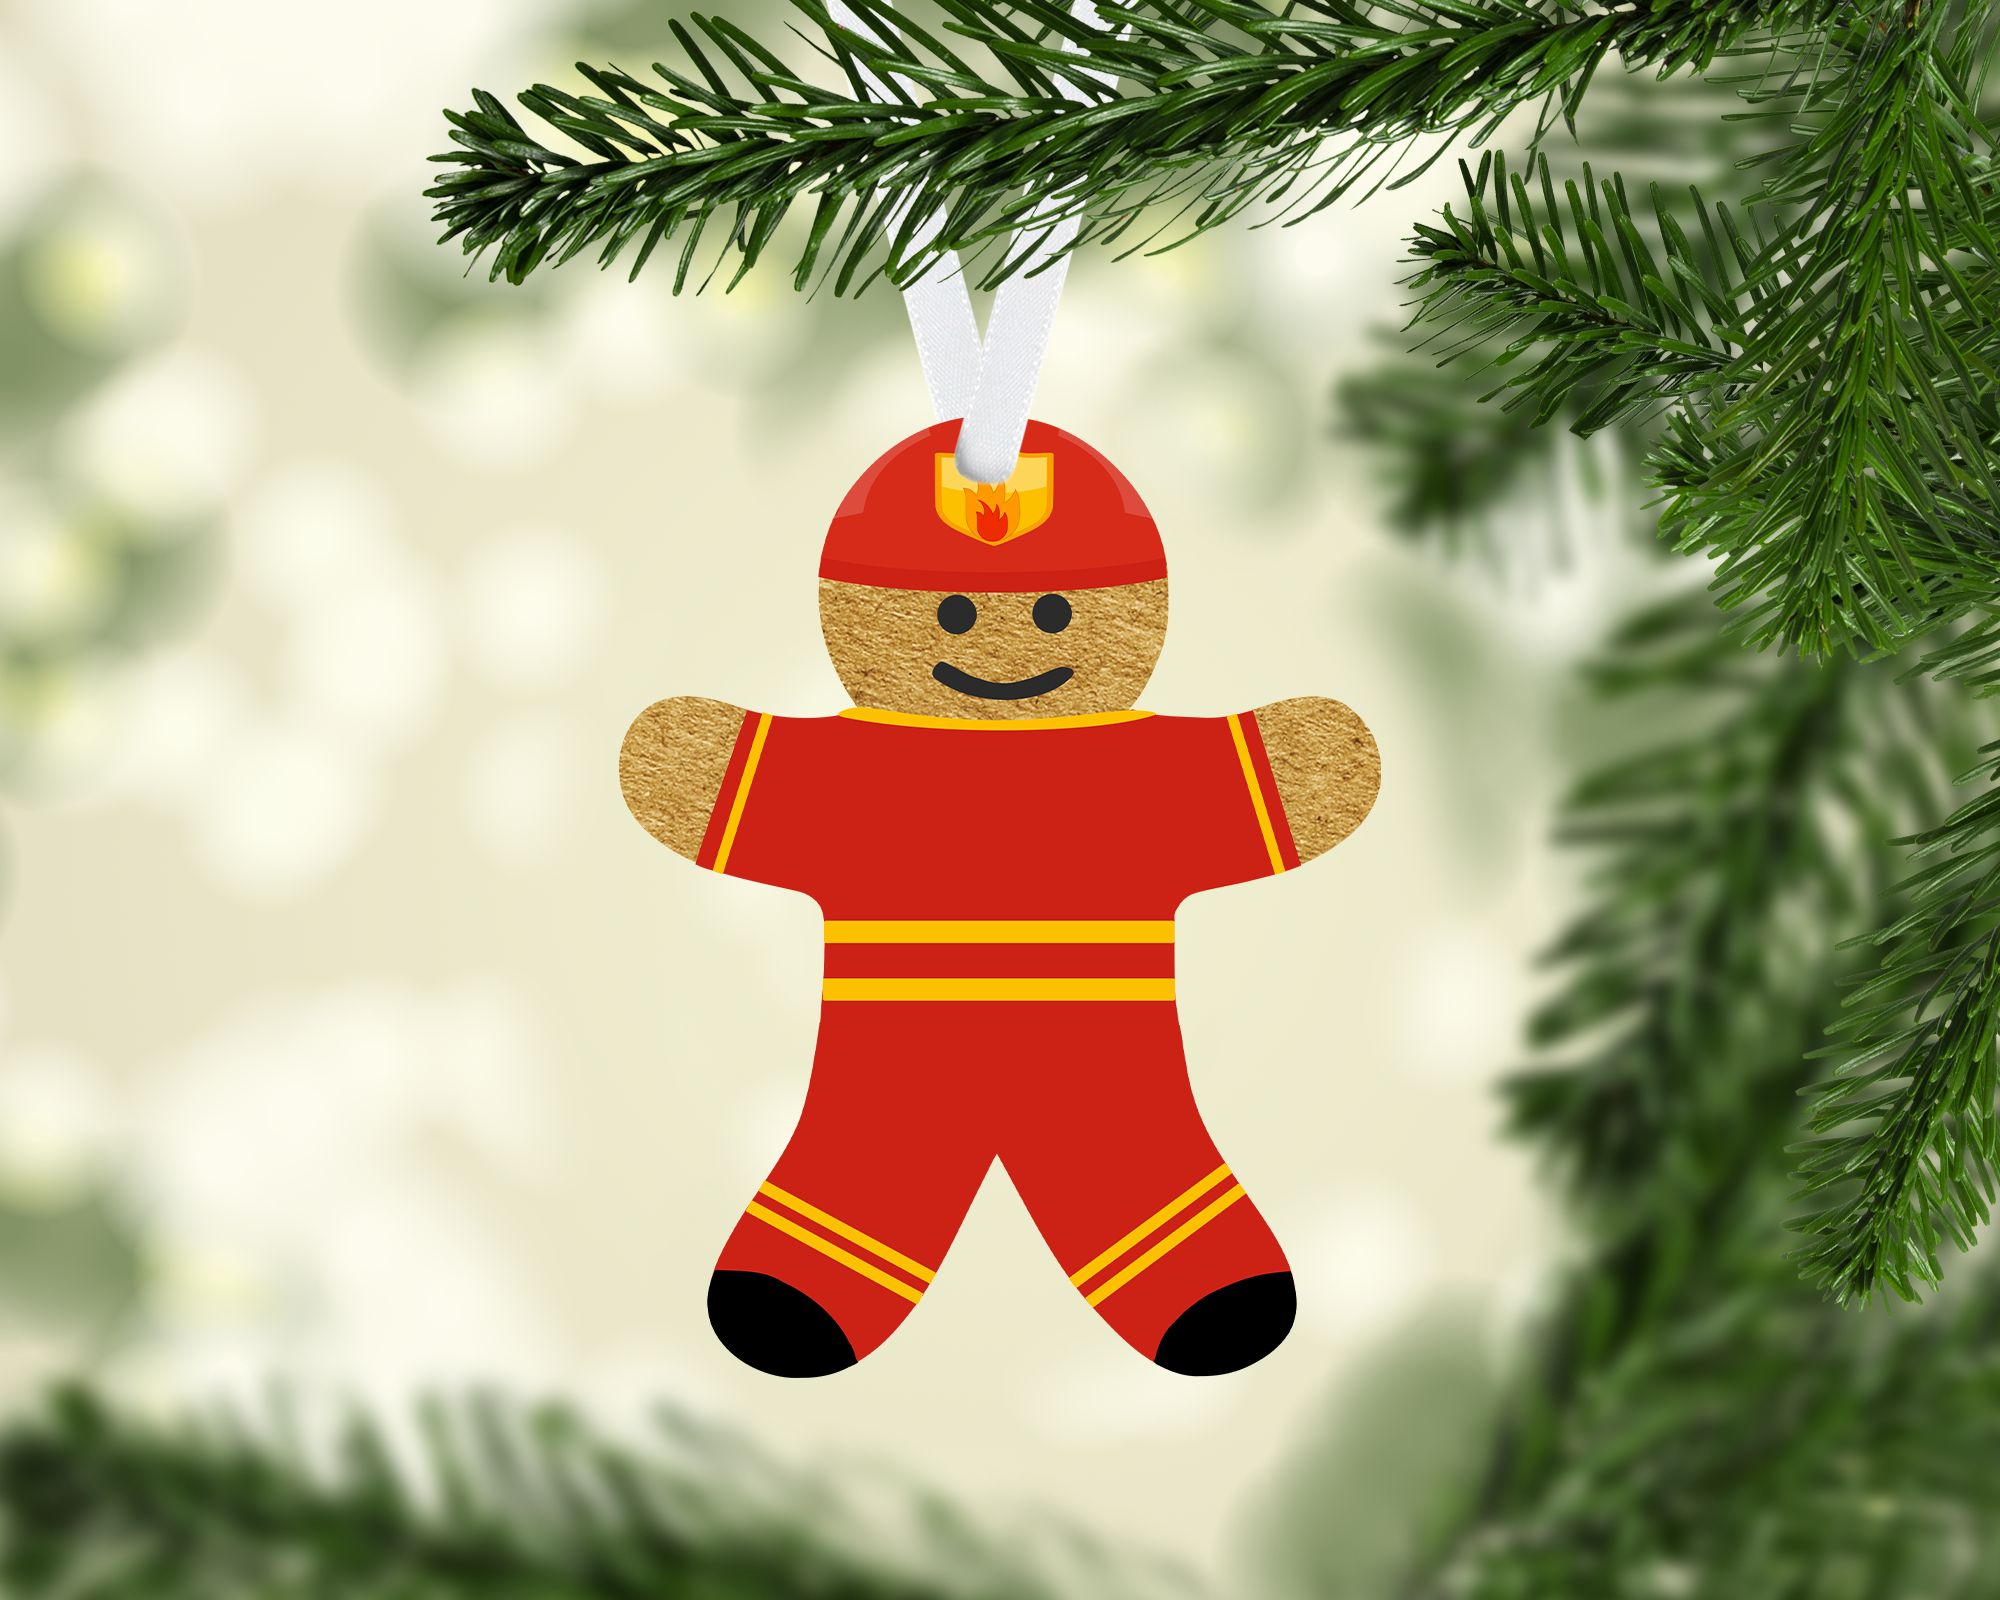 (Instant Print) Digital Download - Gingerbread man fireman design - made for our blanks